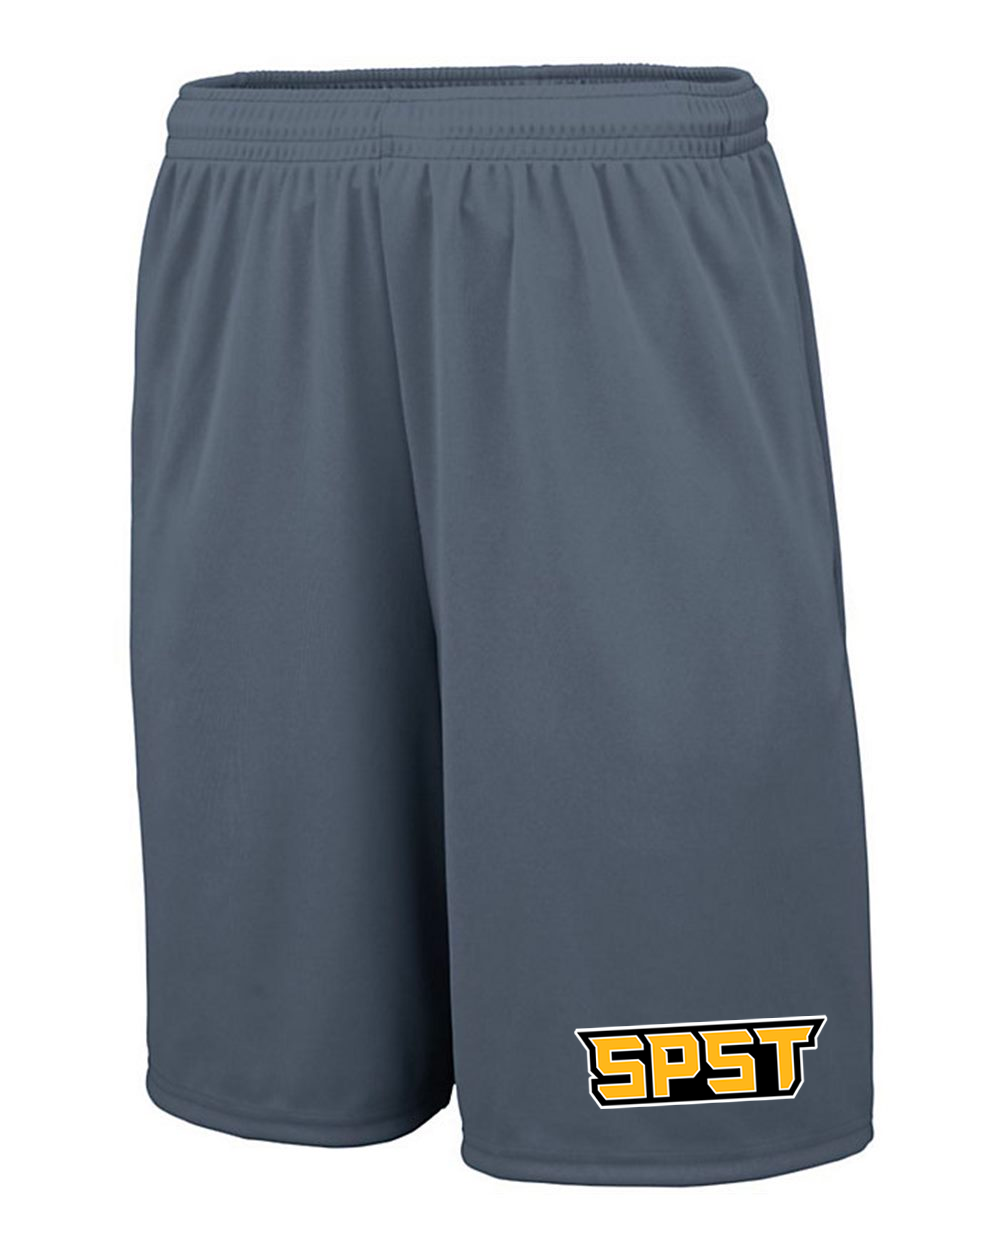 SPST Youth Training Shorts with Pocket - 1429